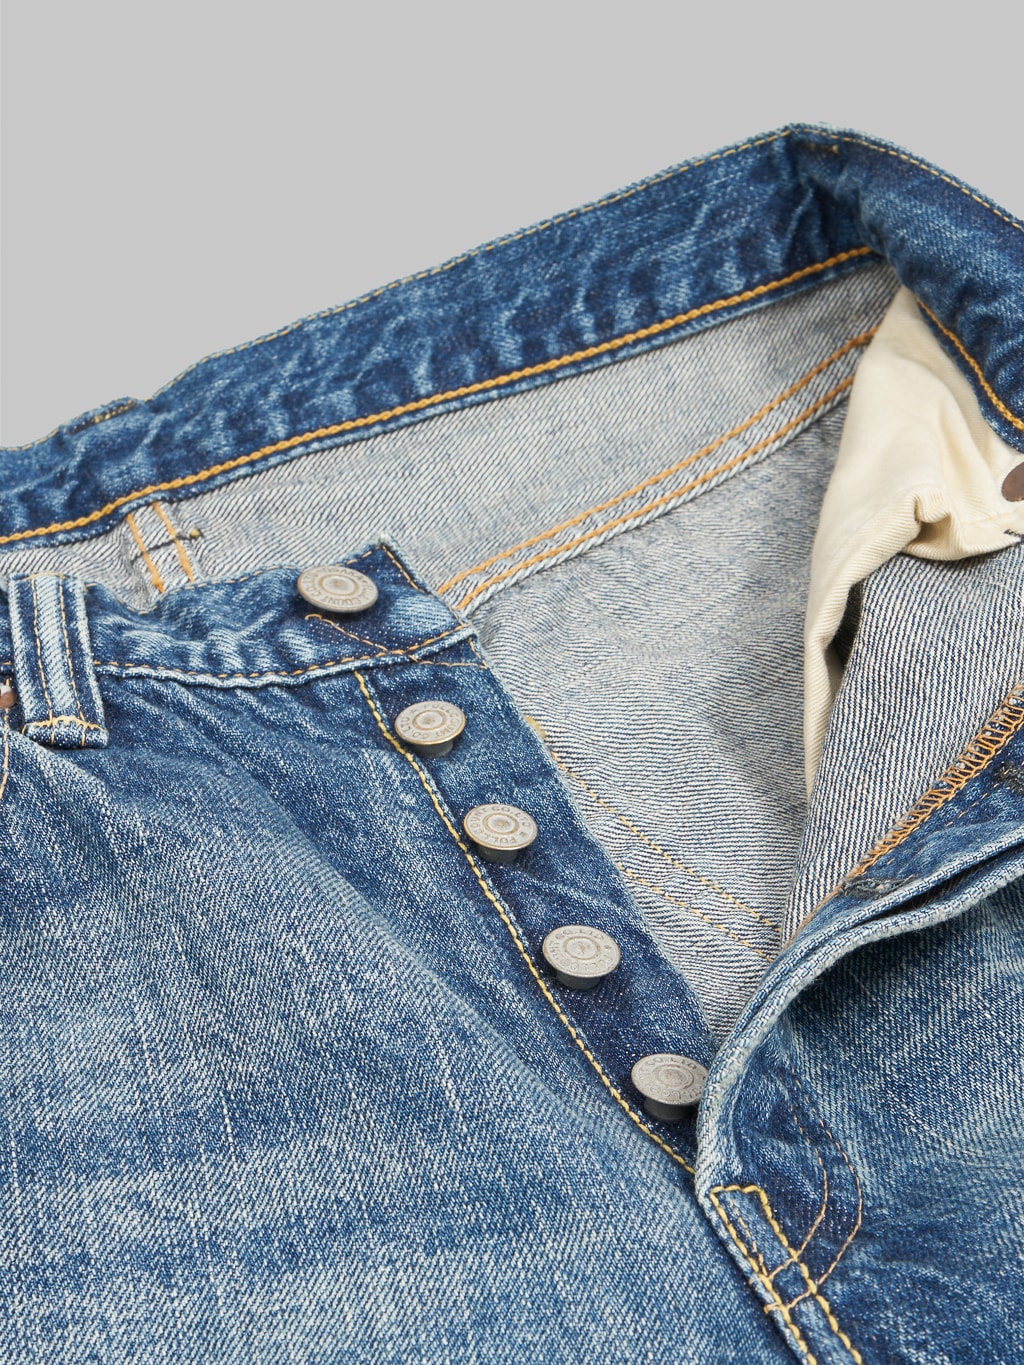 Fullcount 1108 Dartford Slim Straight Jeans custom metal buttons